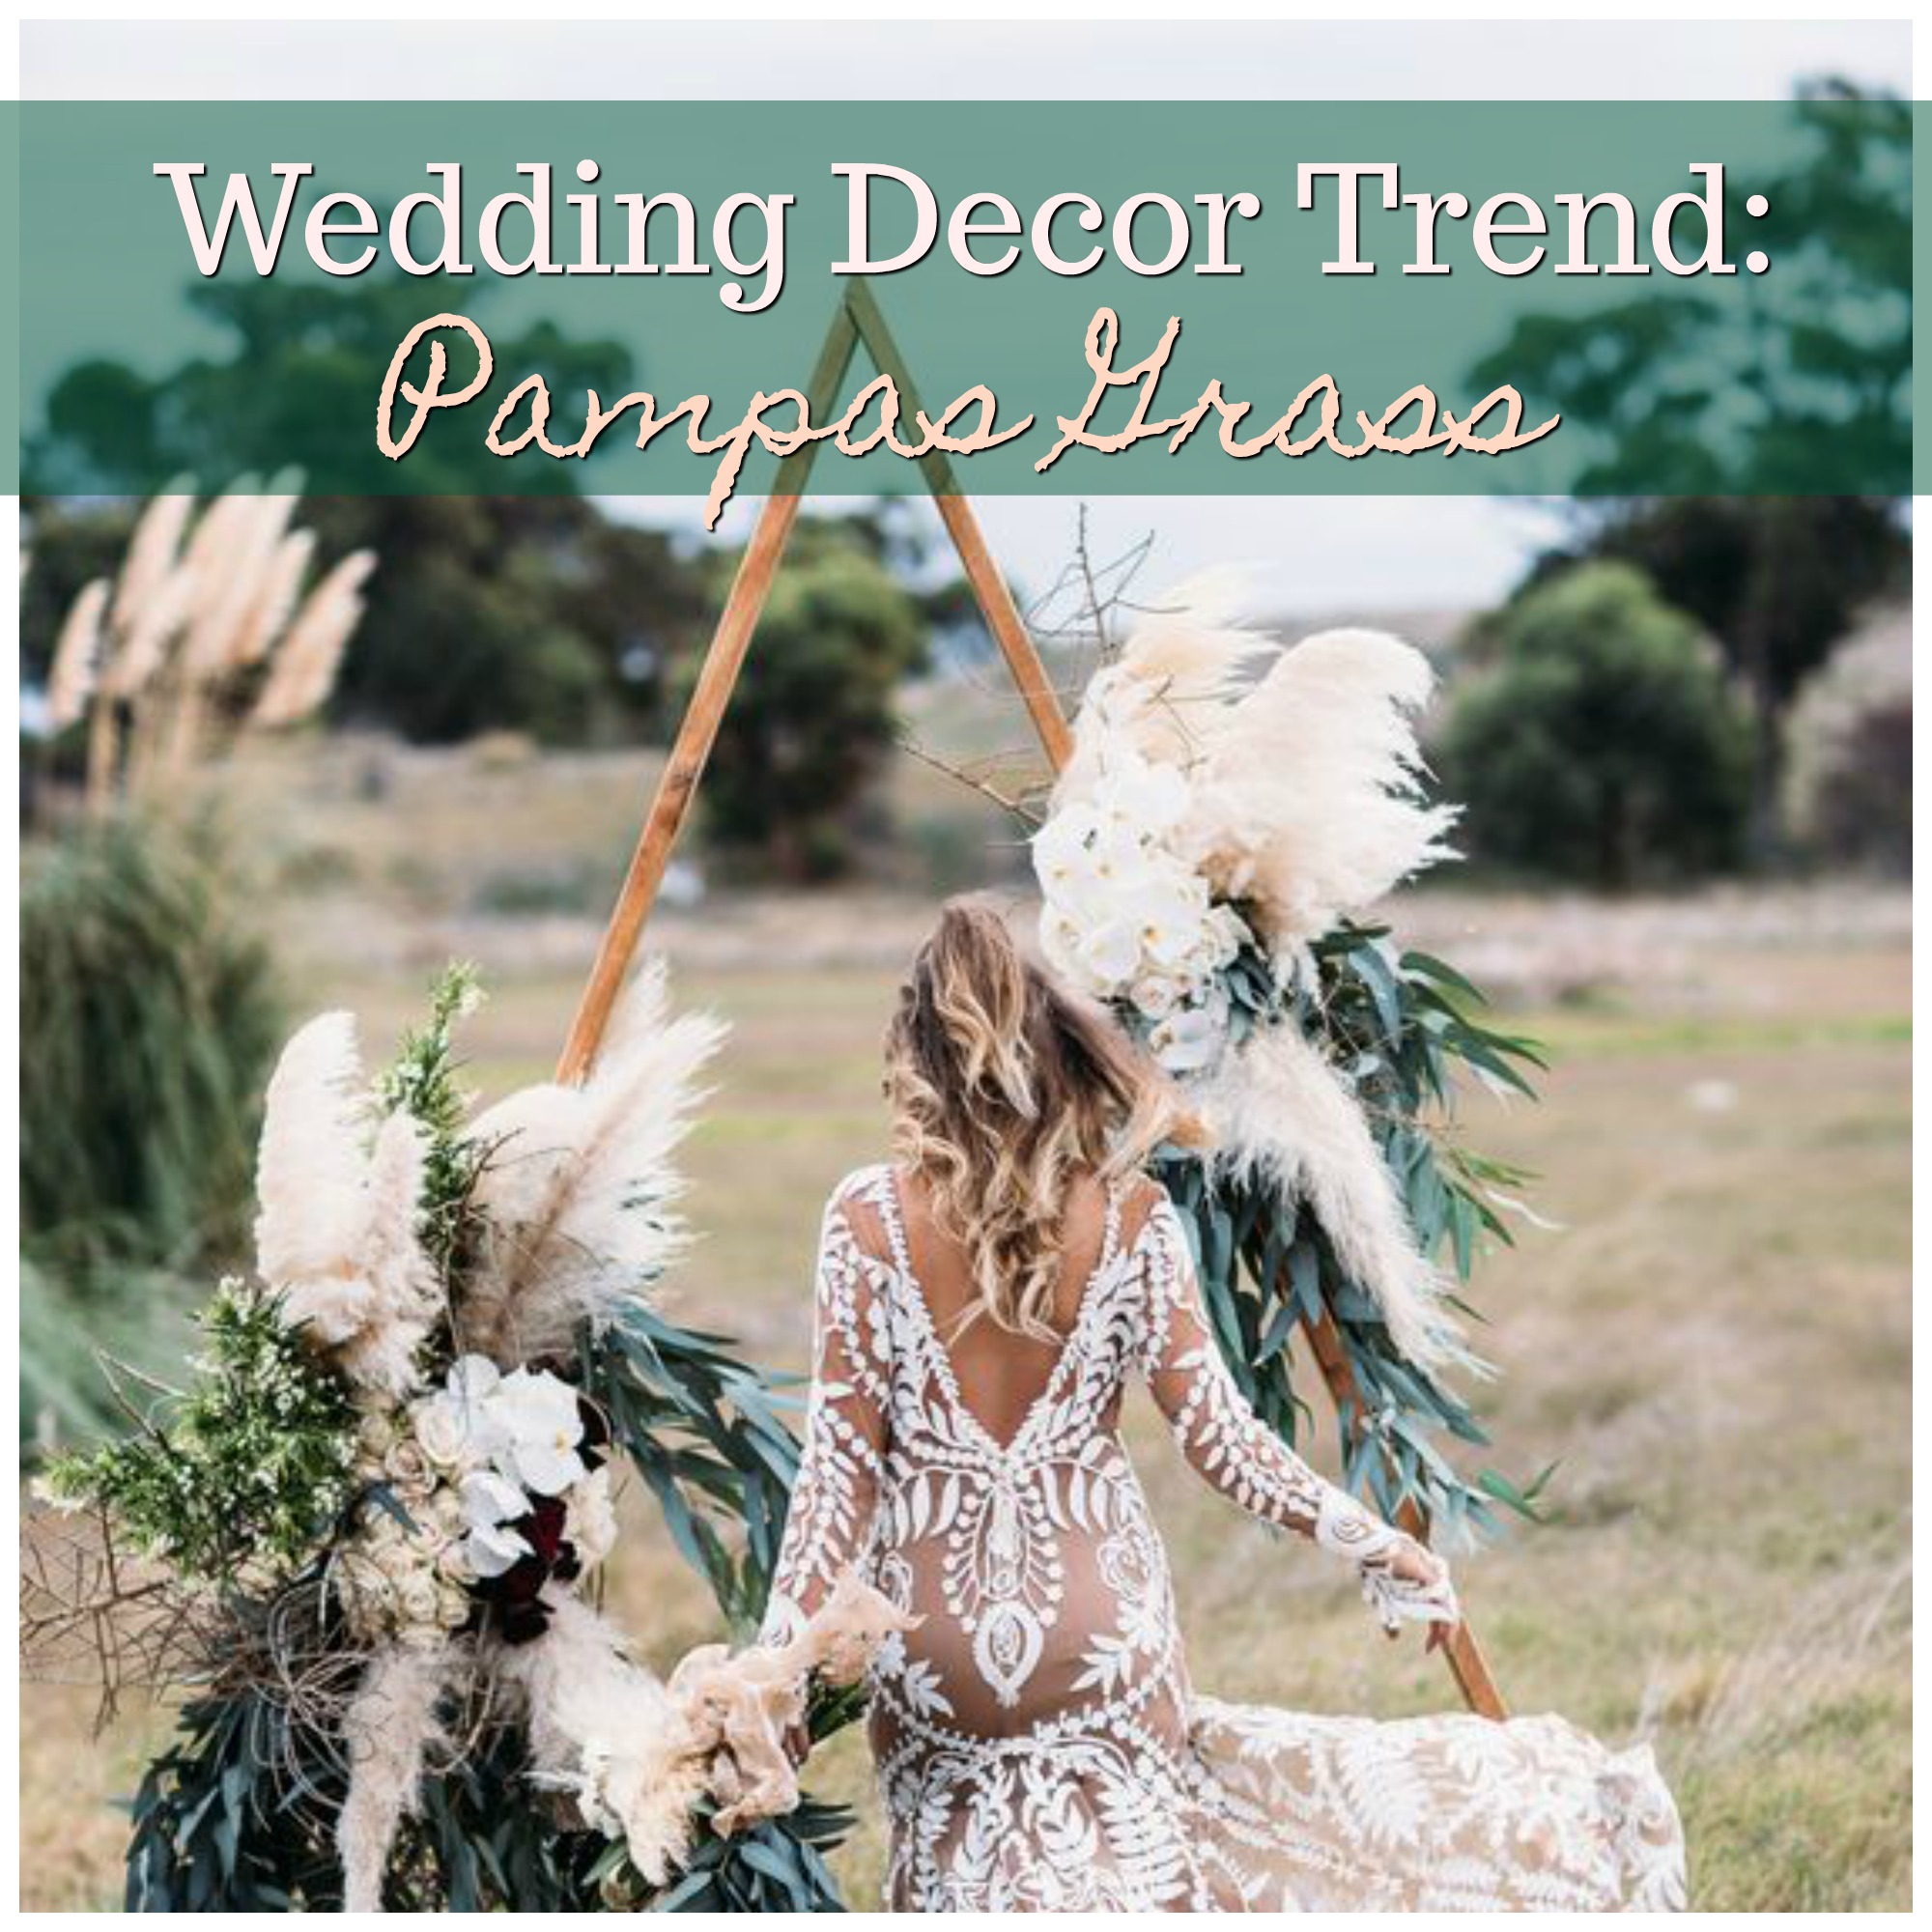 Wedding Decor Trend: Pampas Grass Image